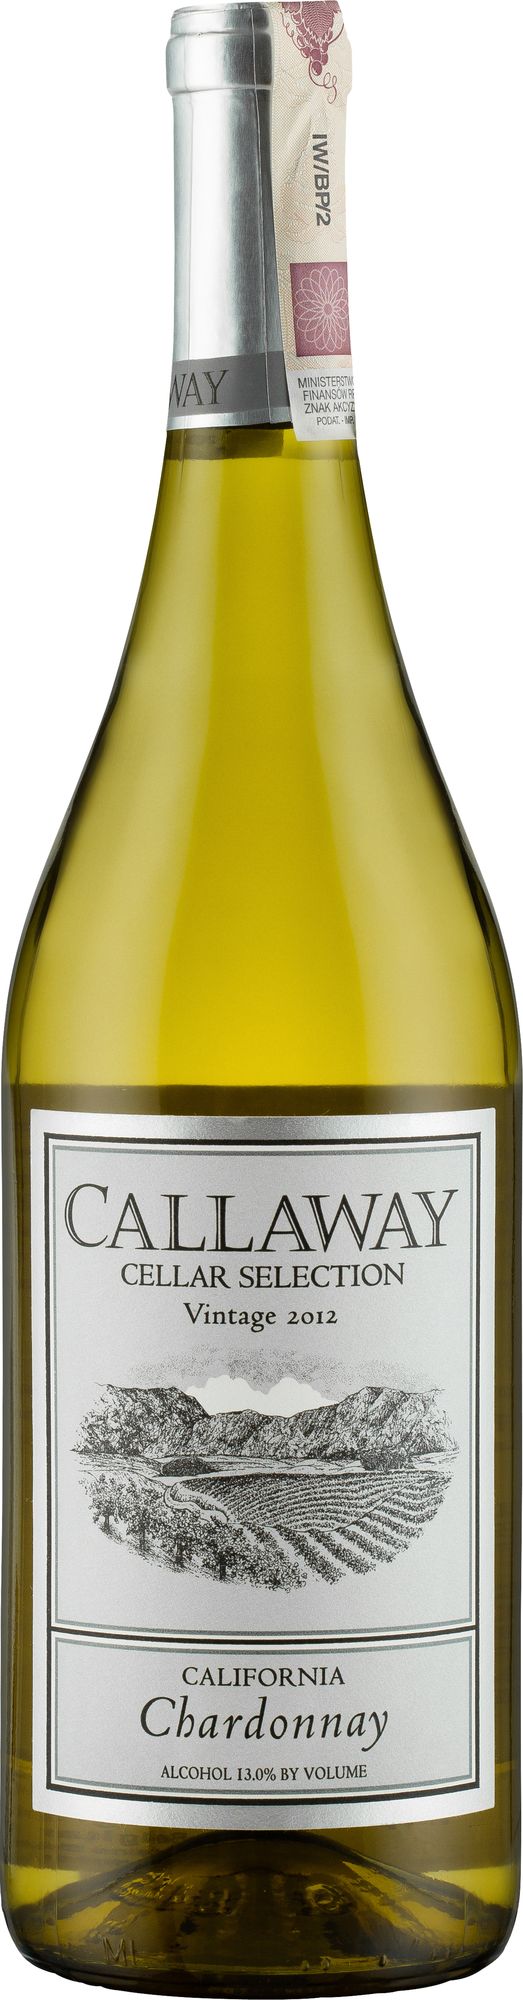 Wino Callaway Chardonnay California